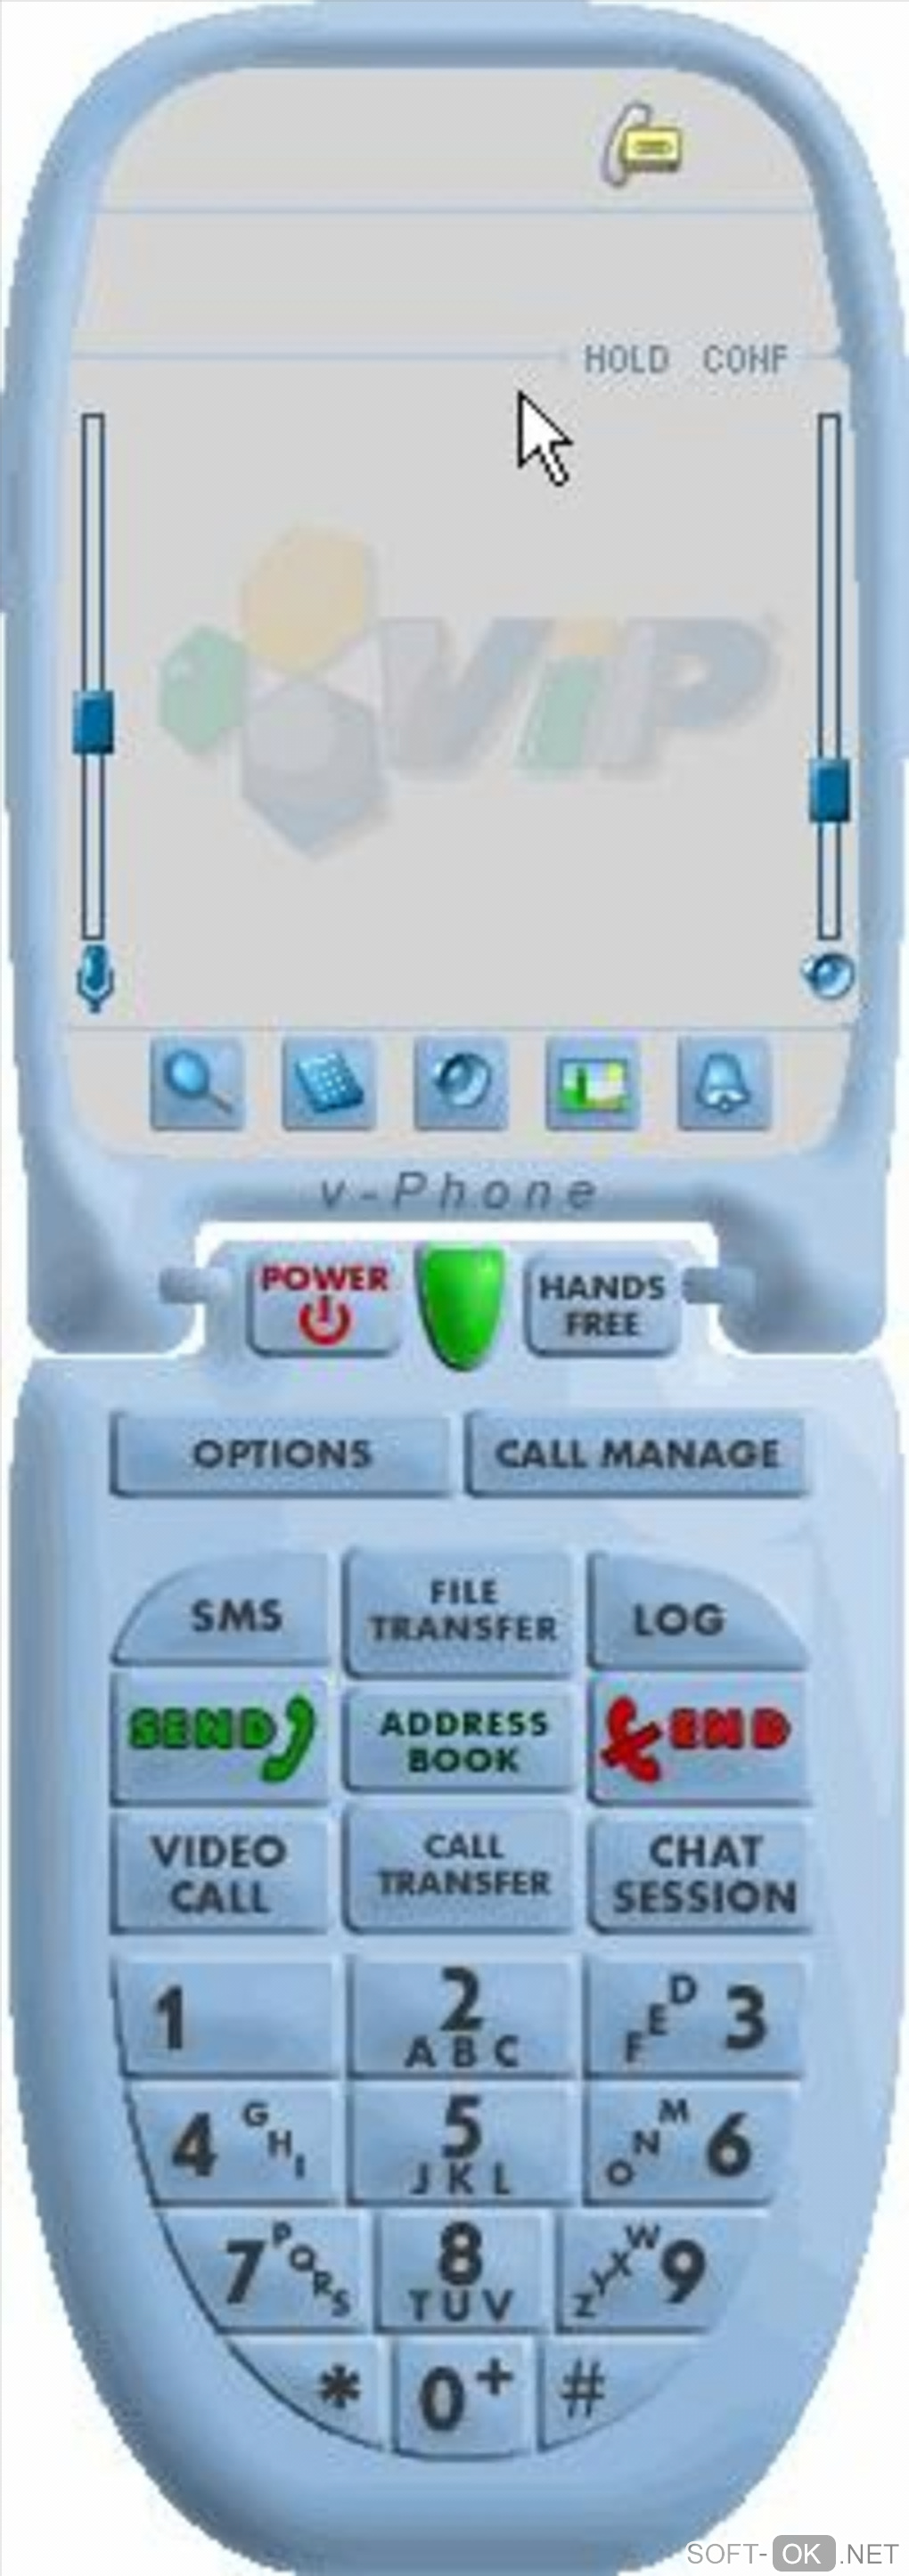 Screenshot №1 "V-Phone Communication Center"